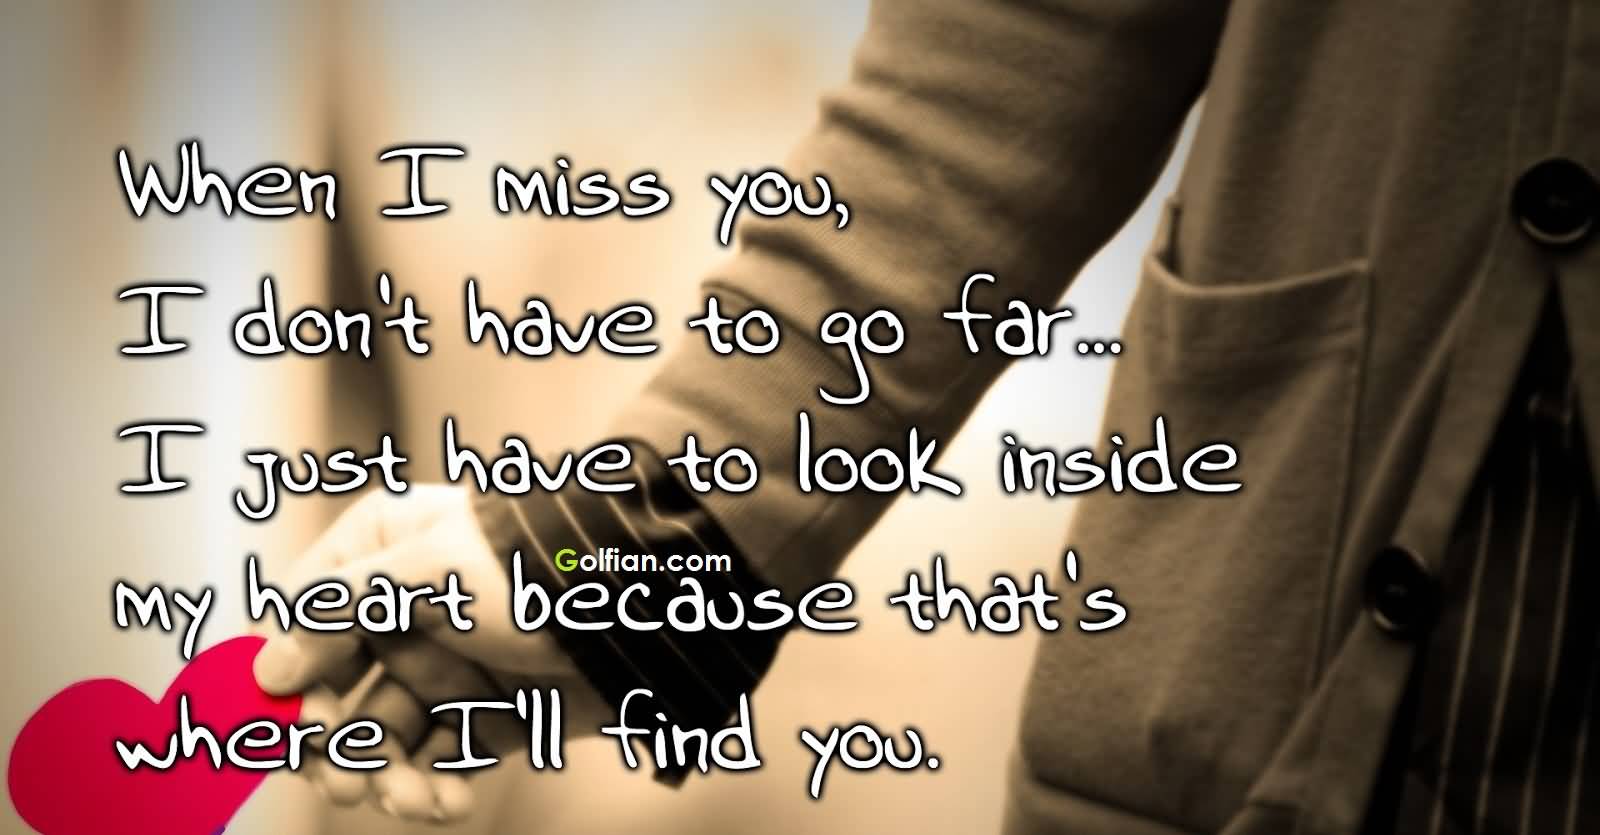 U quotes miss sad Missing You